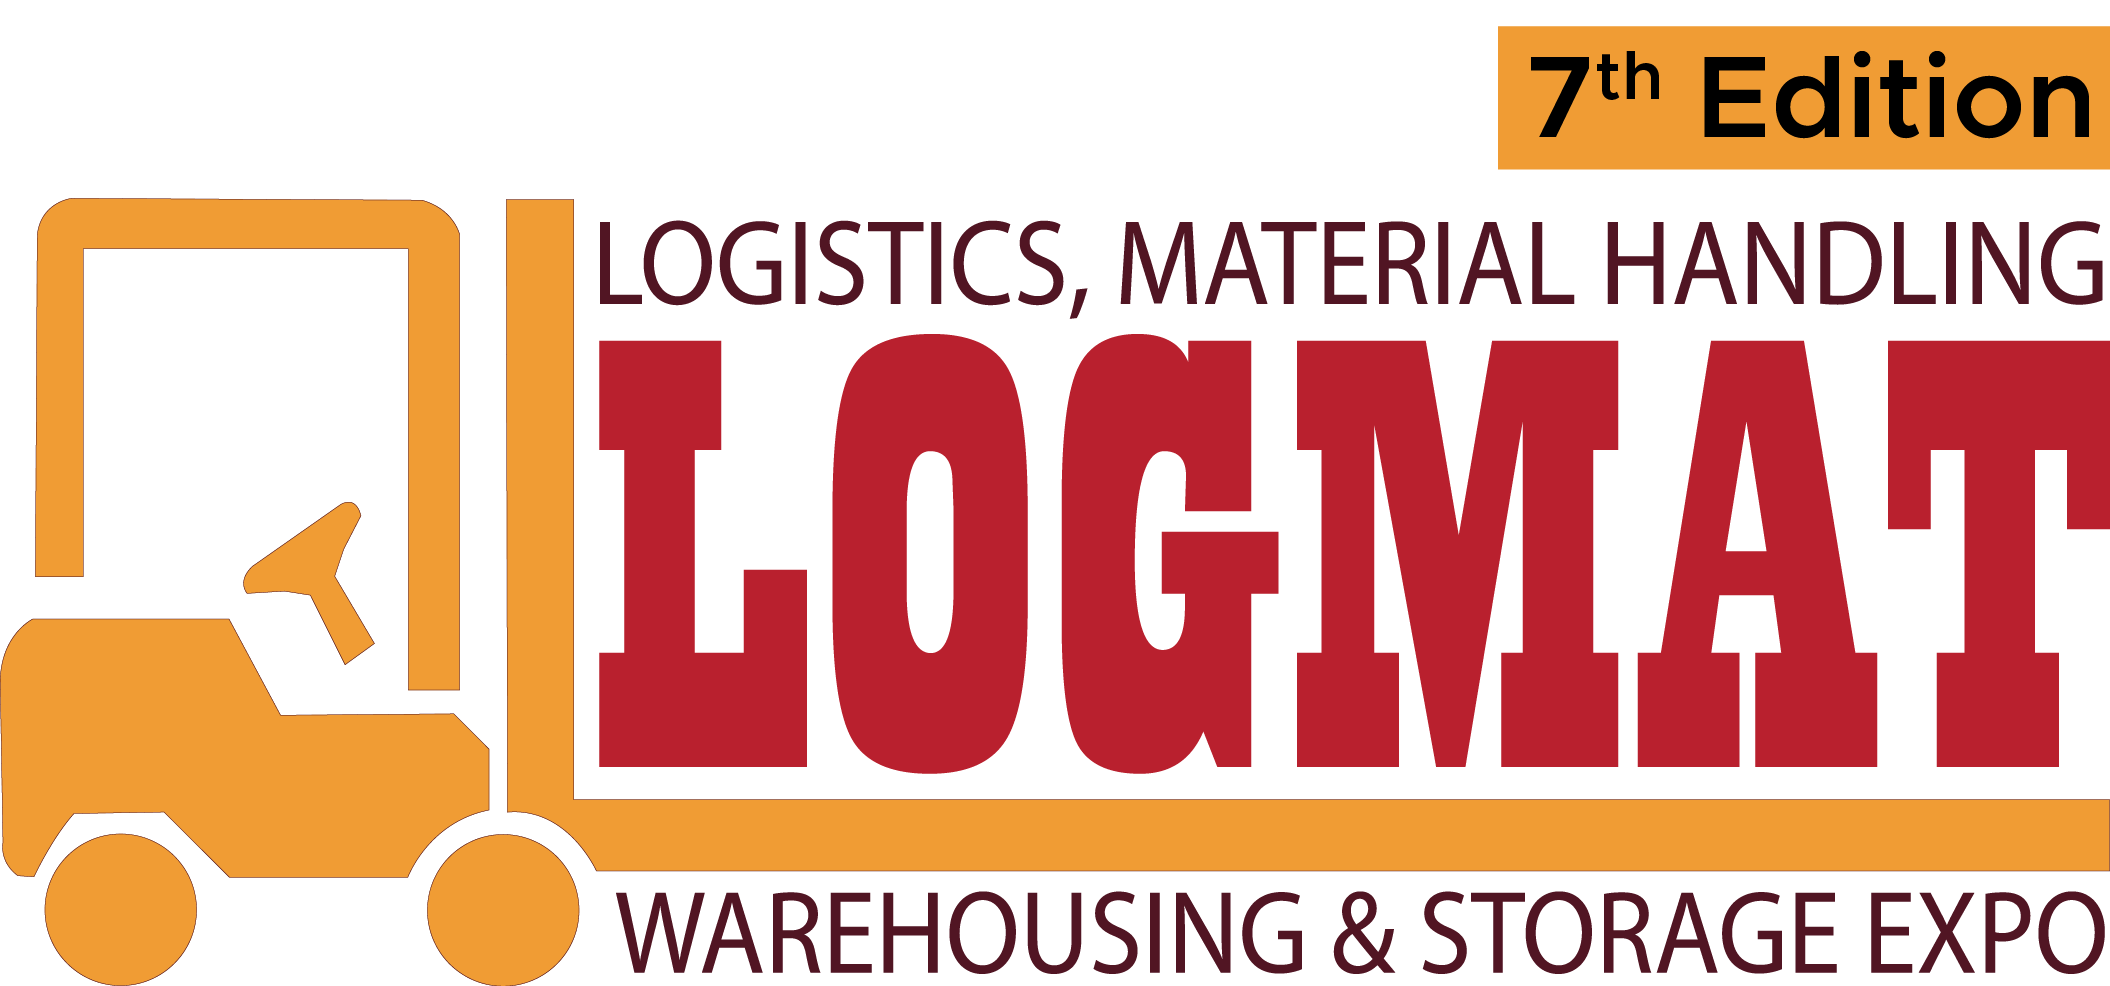 Logistics, Storage, Warehousing & Material Handling Expo